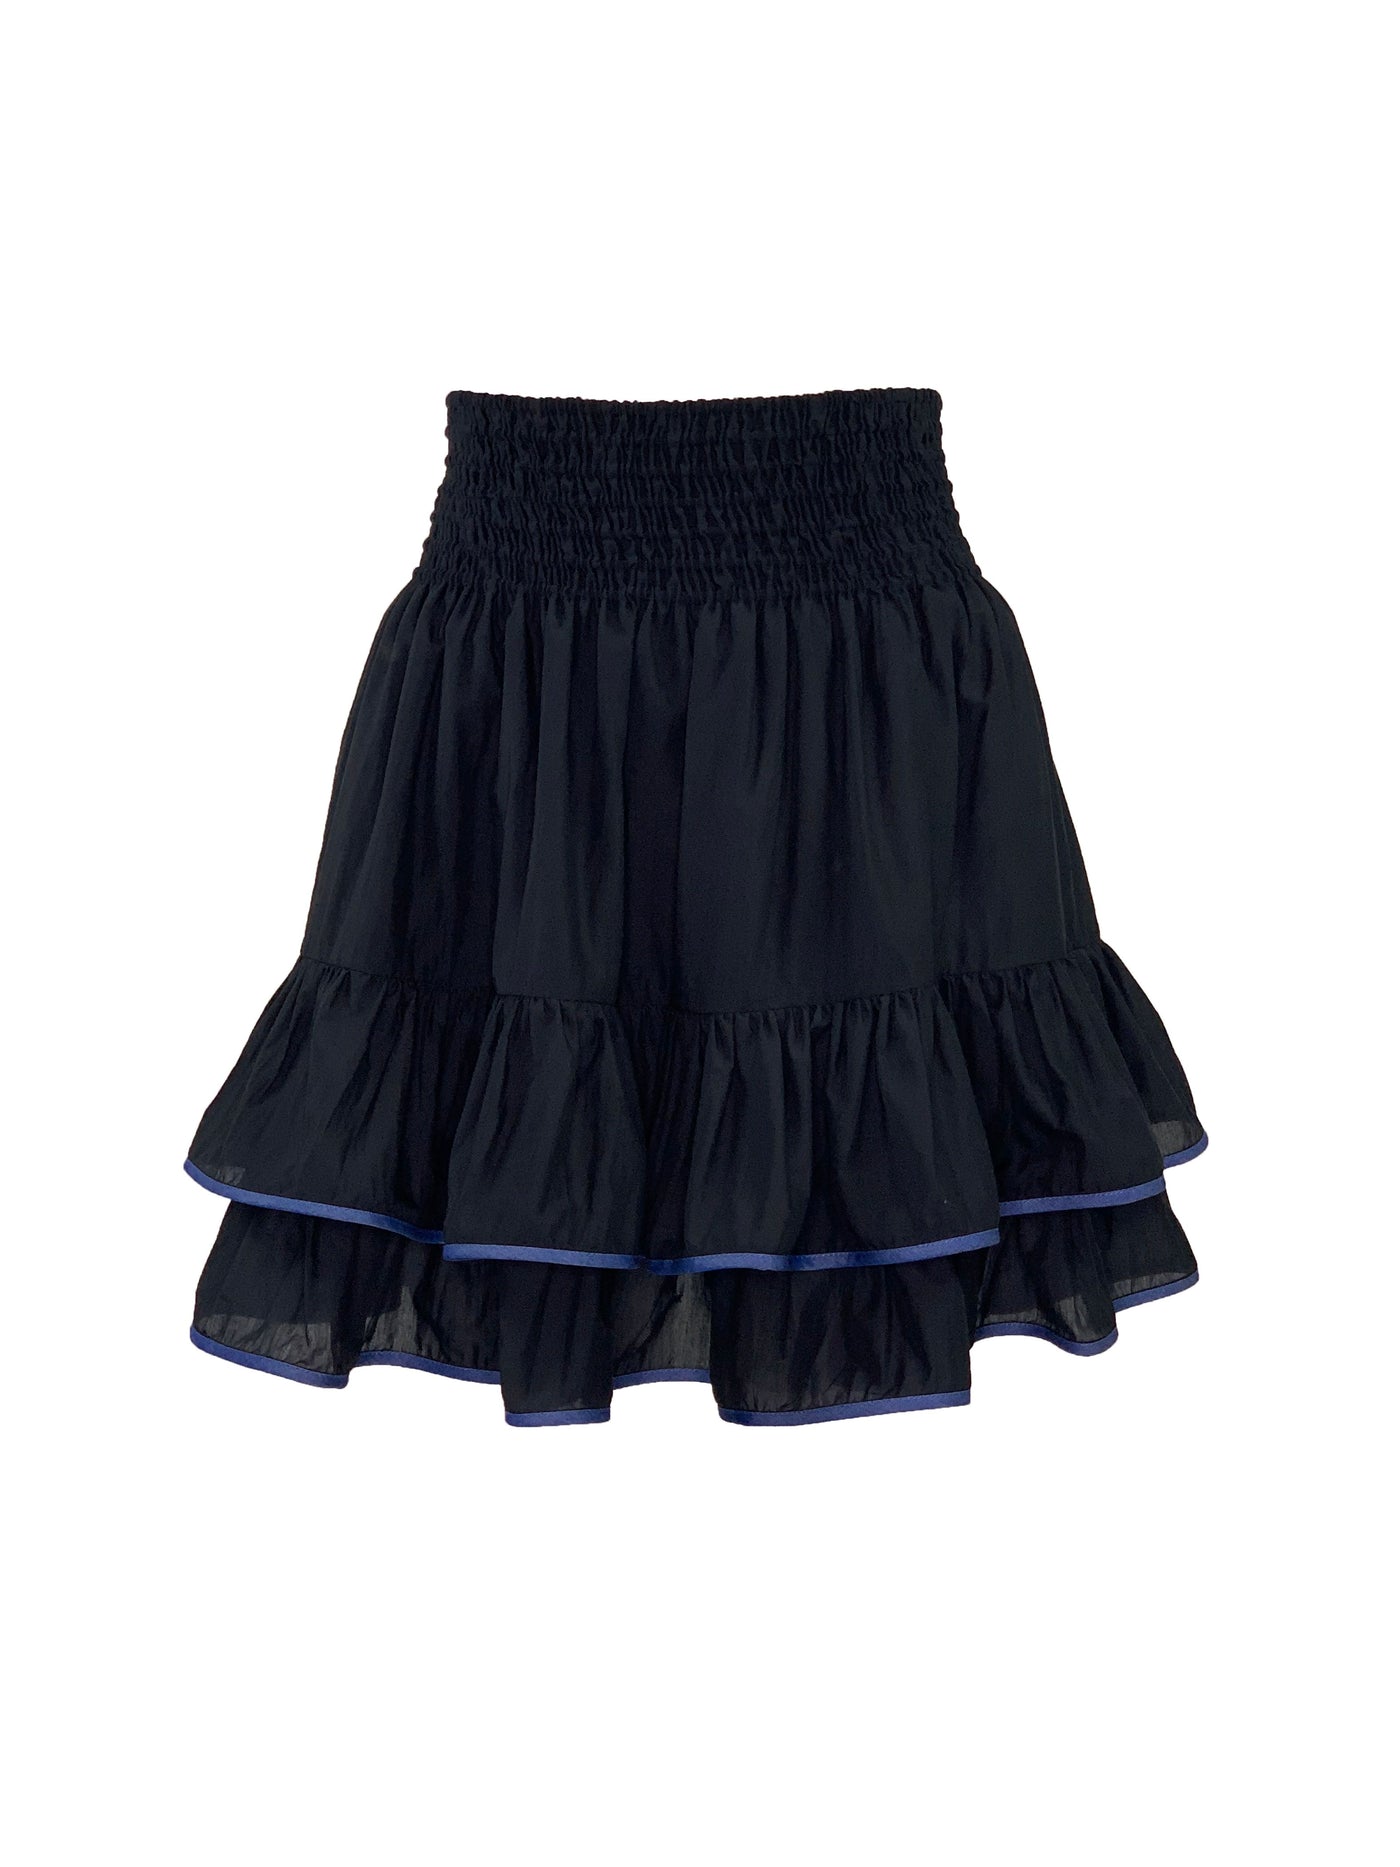 Erika short skirt by KonaCoco